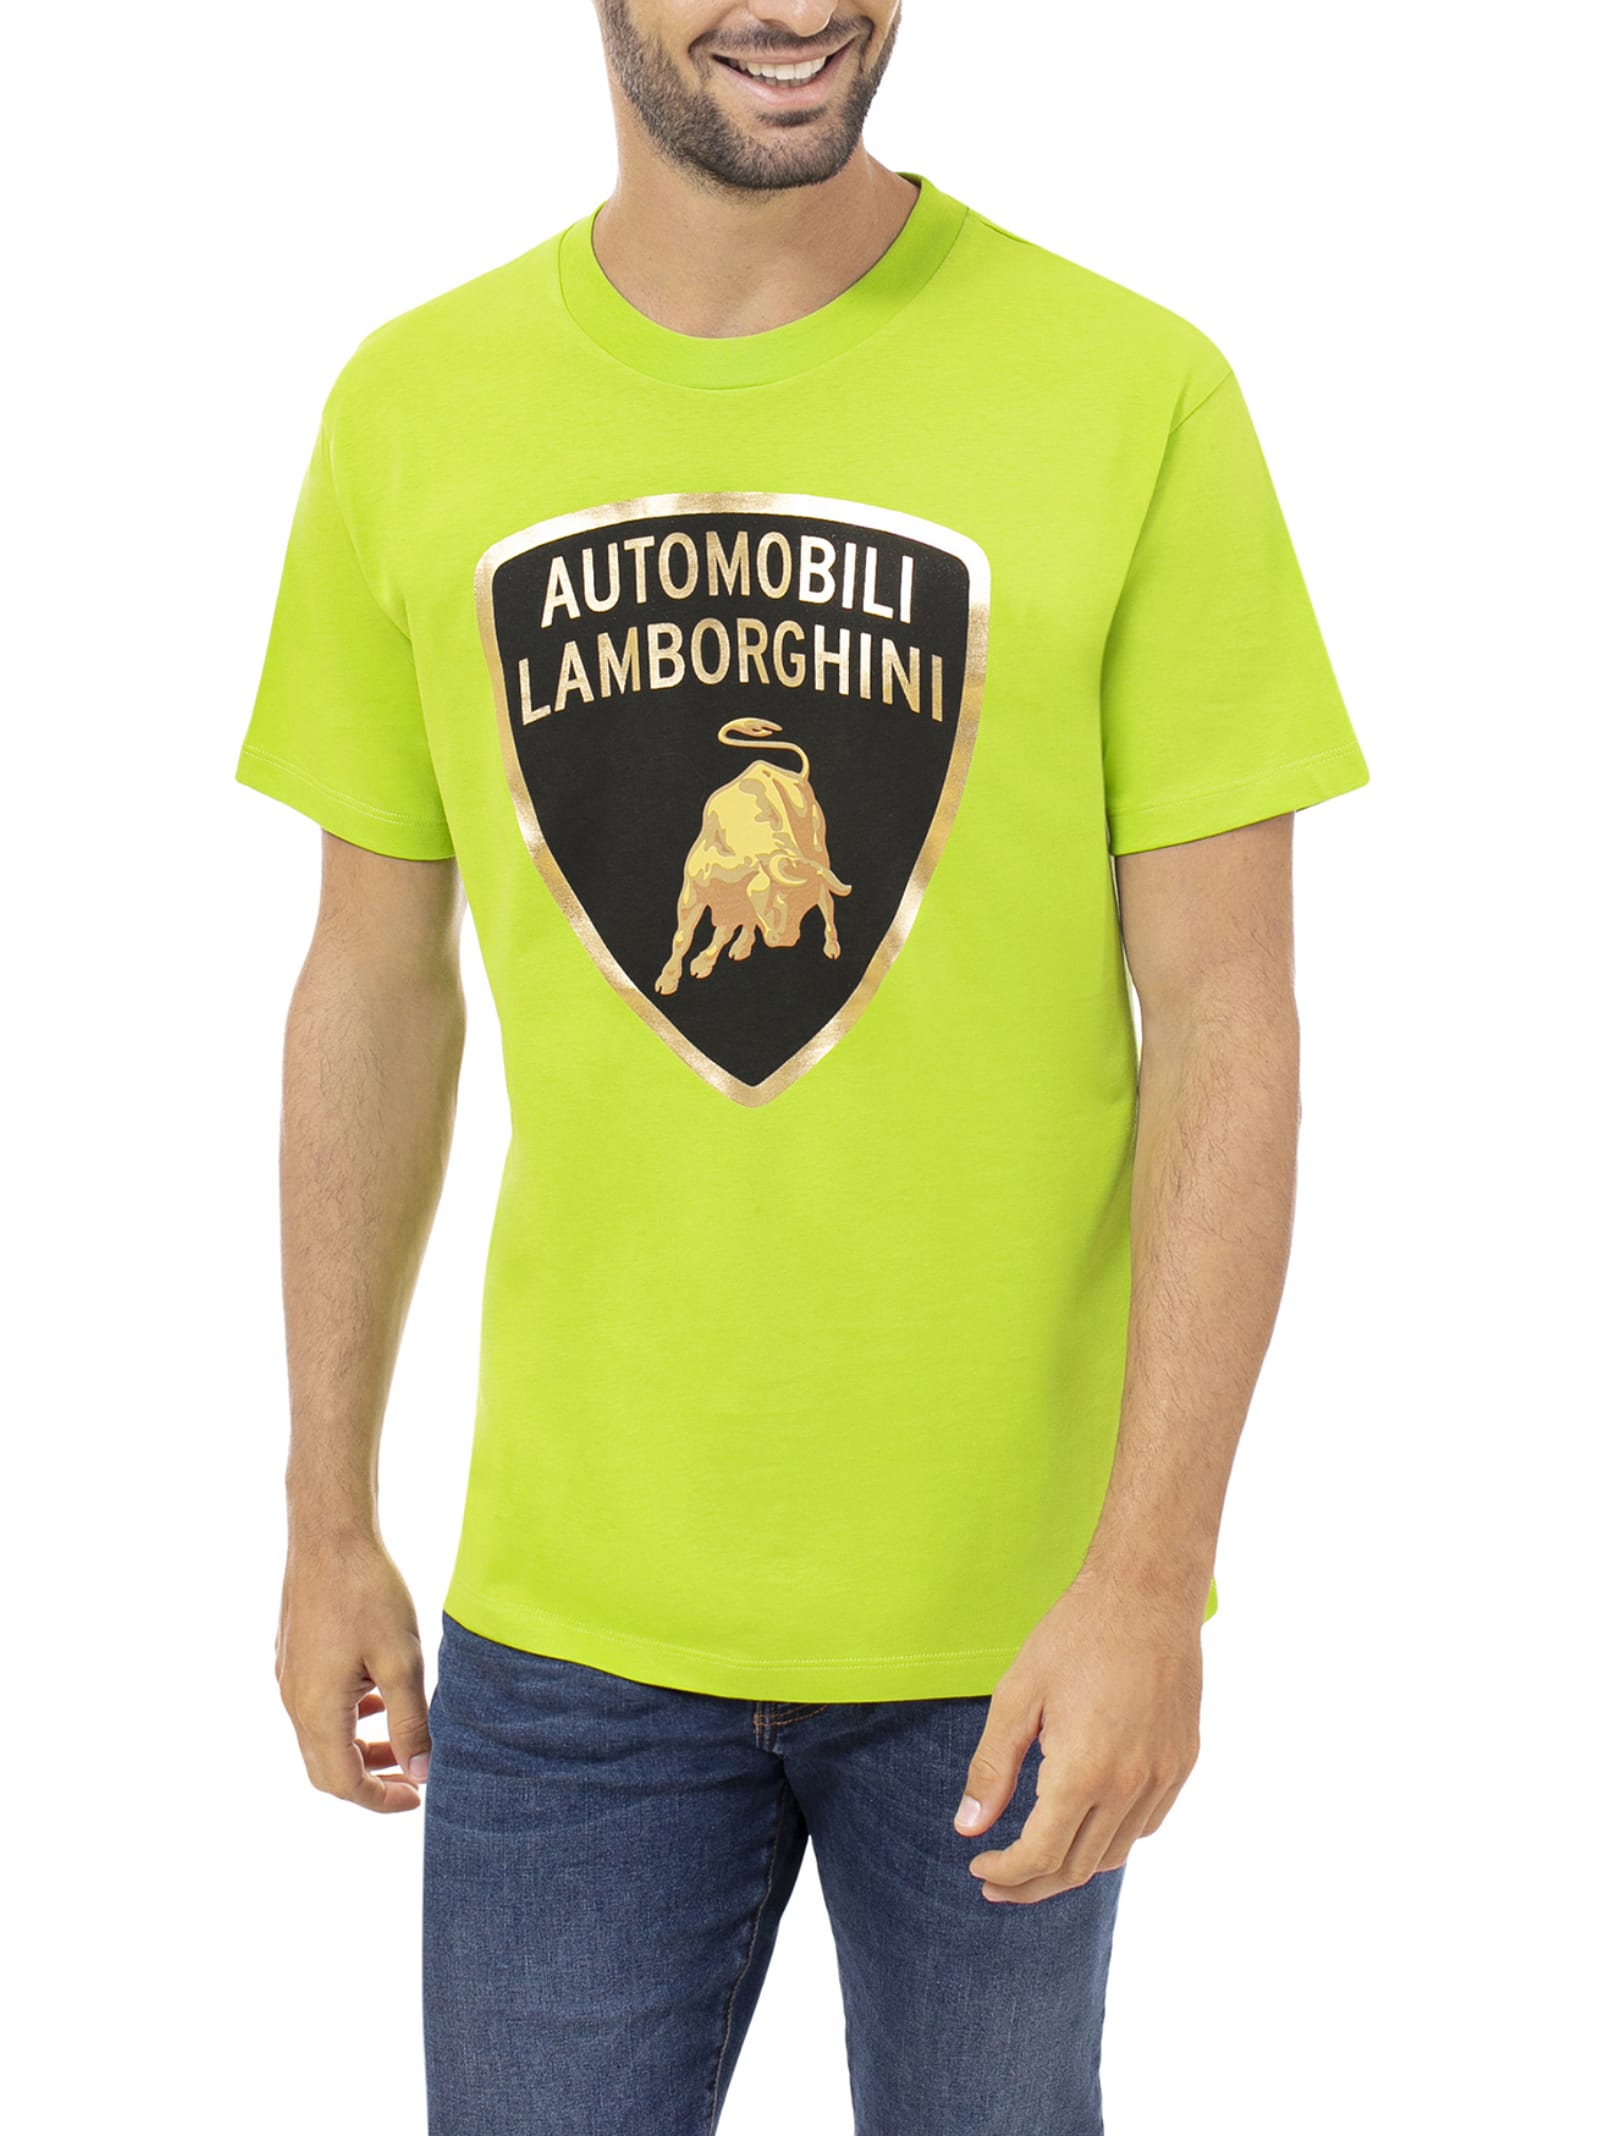 Automobili Lamborghini Loose Fit Scandal Green T-shirt With Large Shield